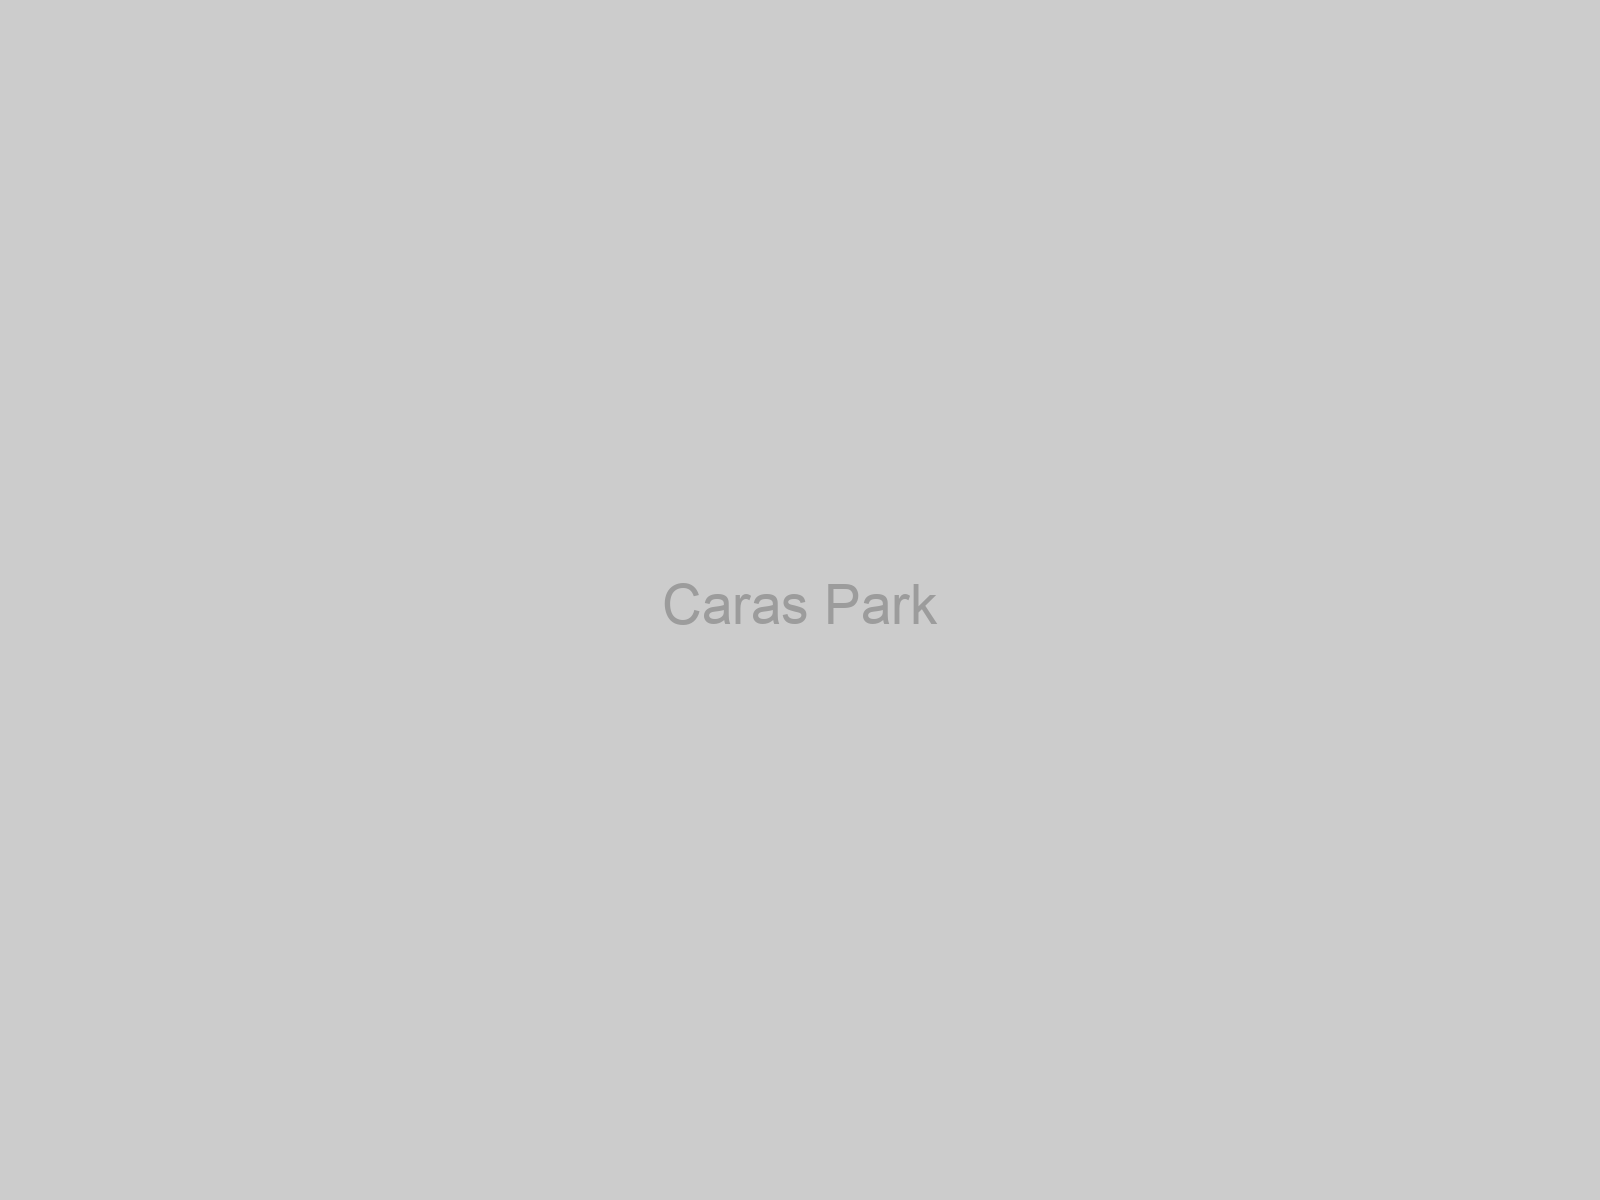 Caras Park